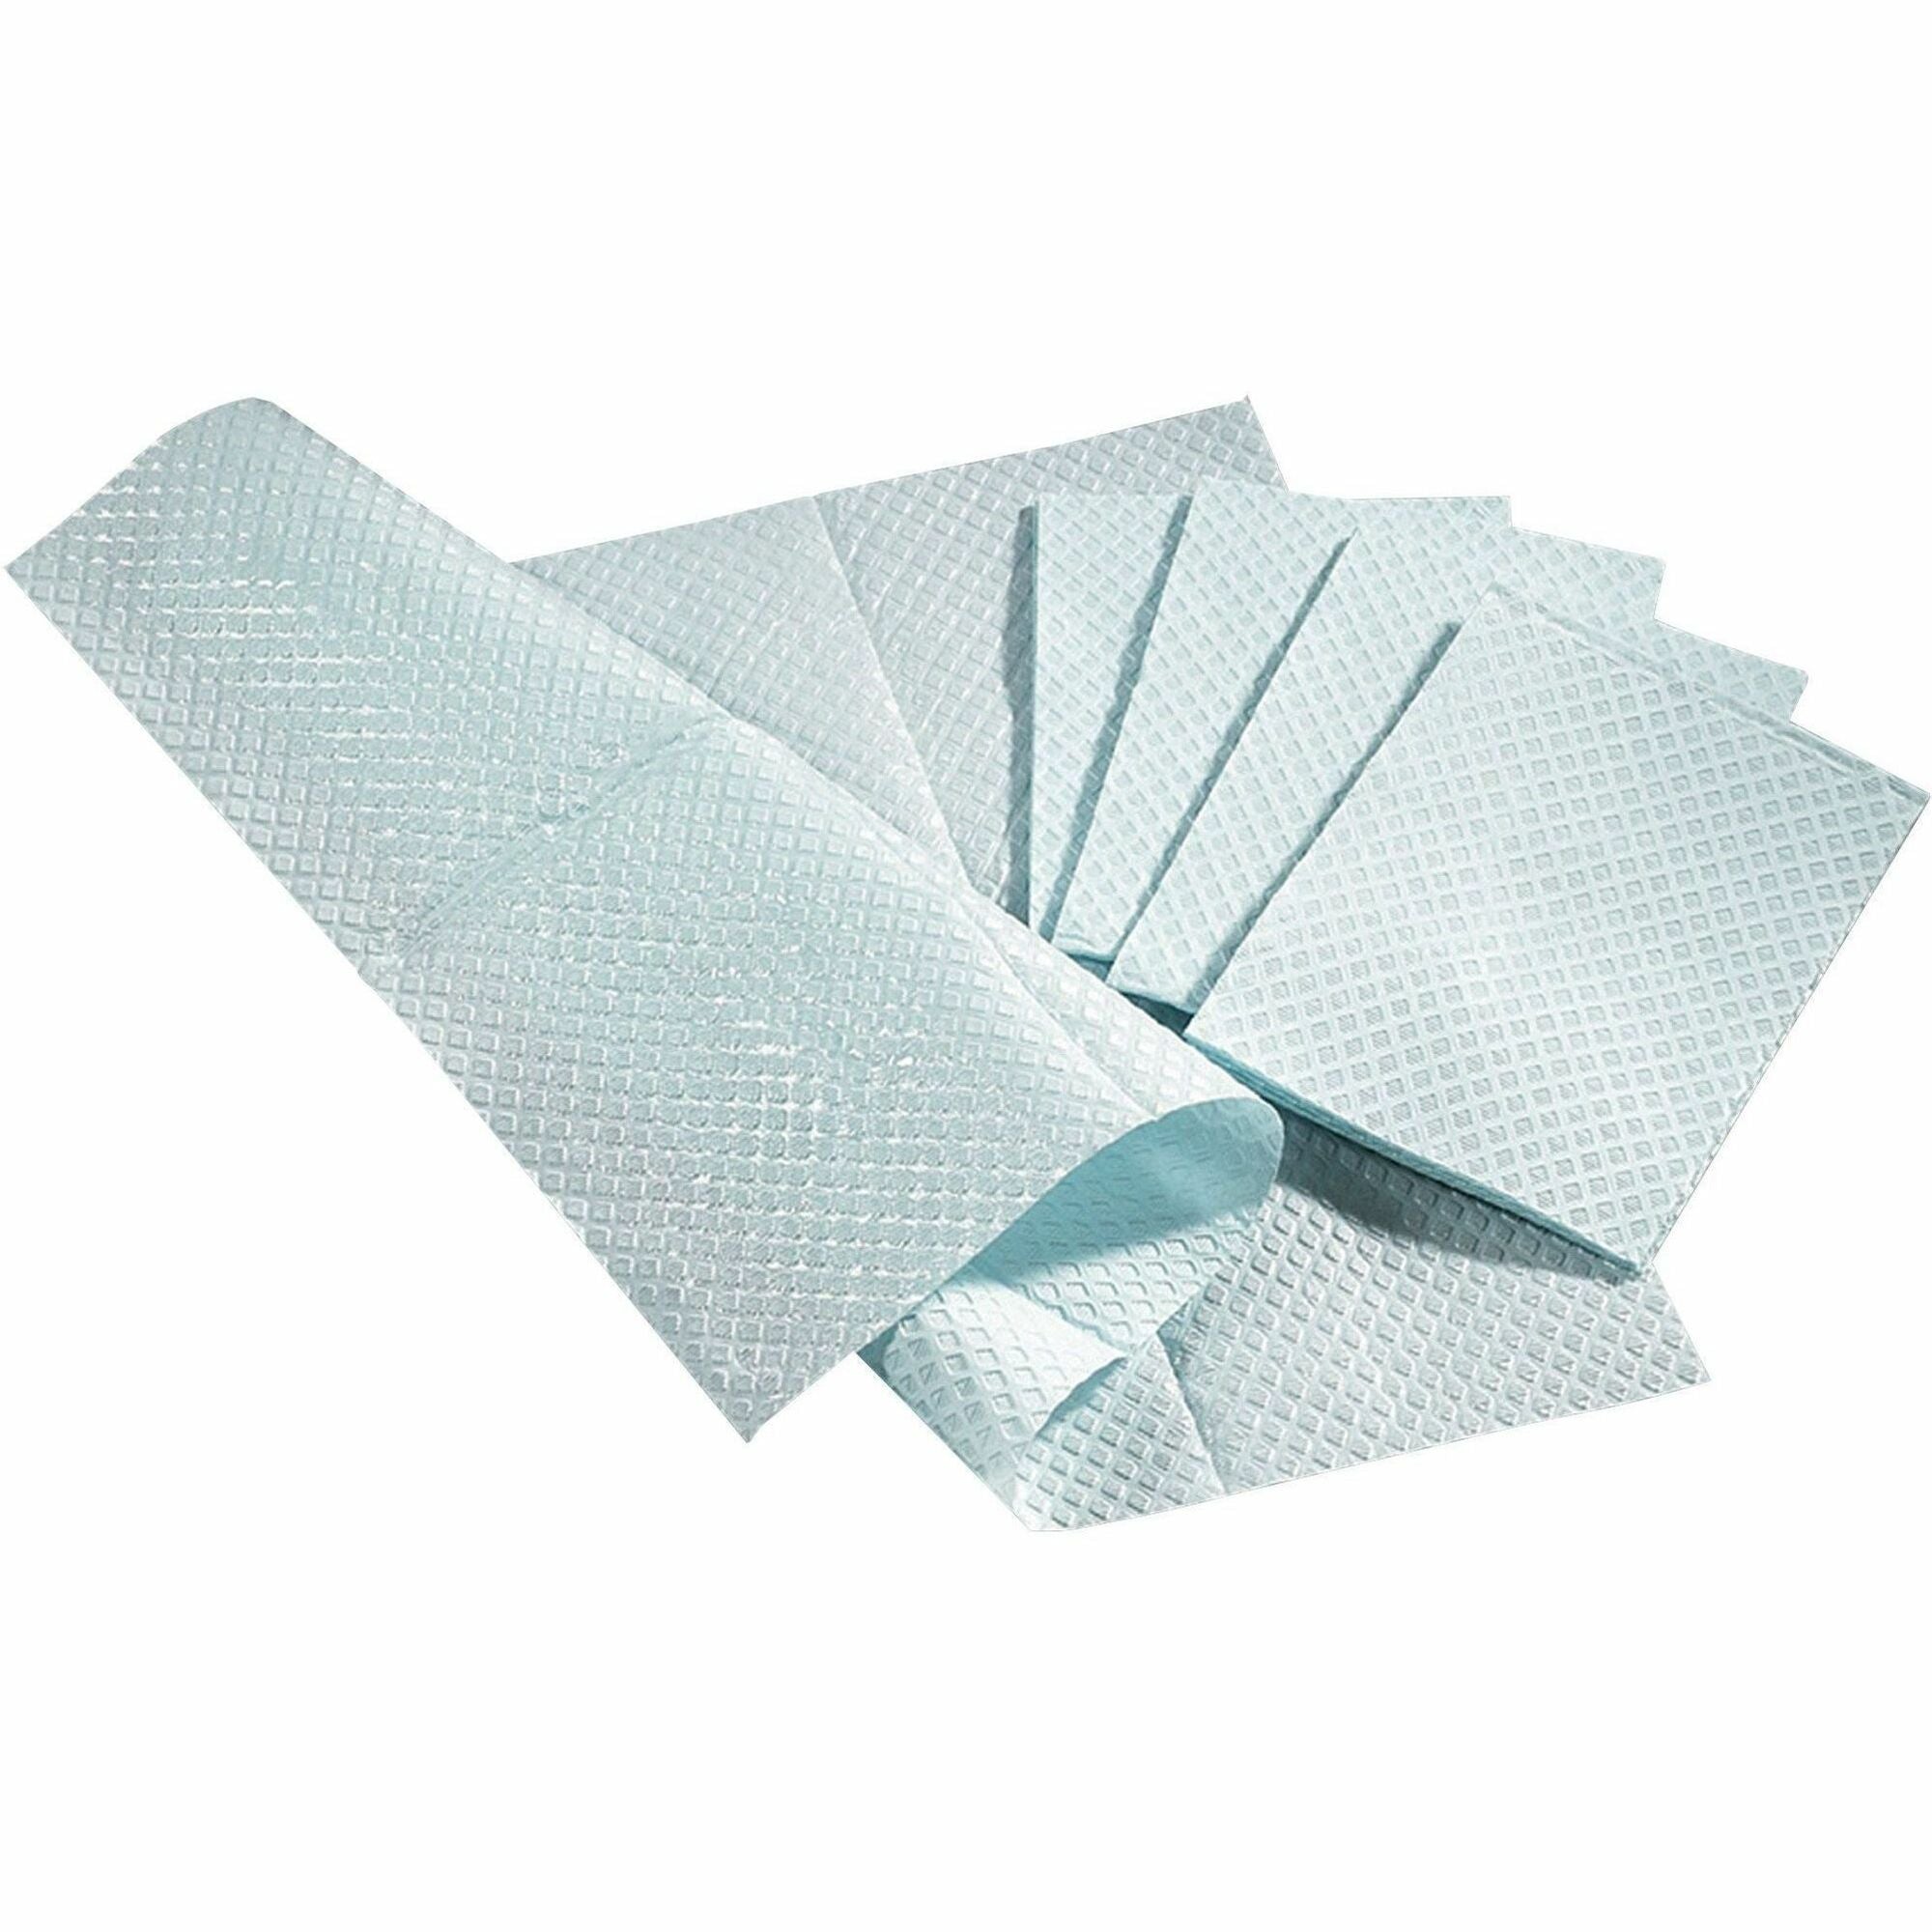 Medline Standard Poly-backed Tissue Towels - Tissue - For Medical - Blue - 500 / Box - 